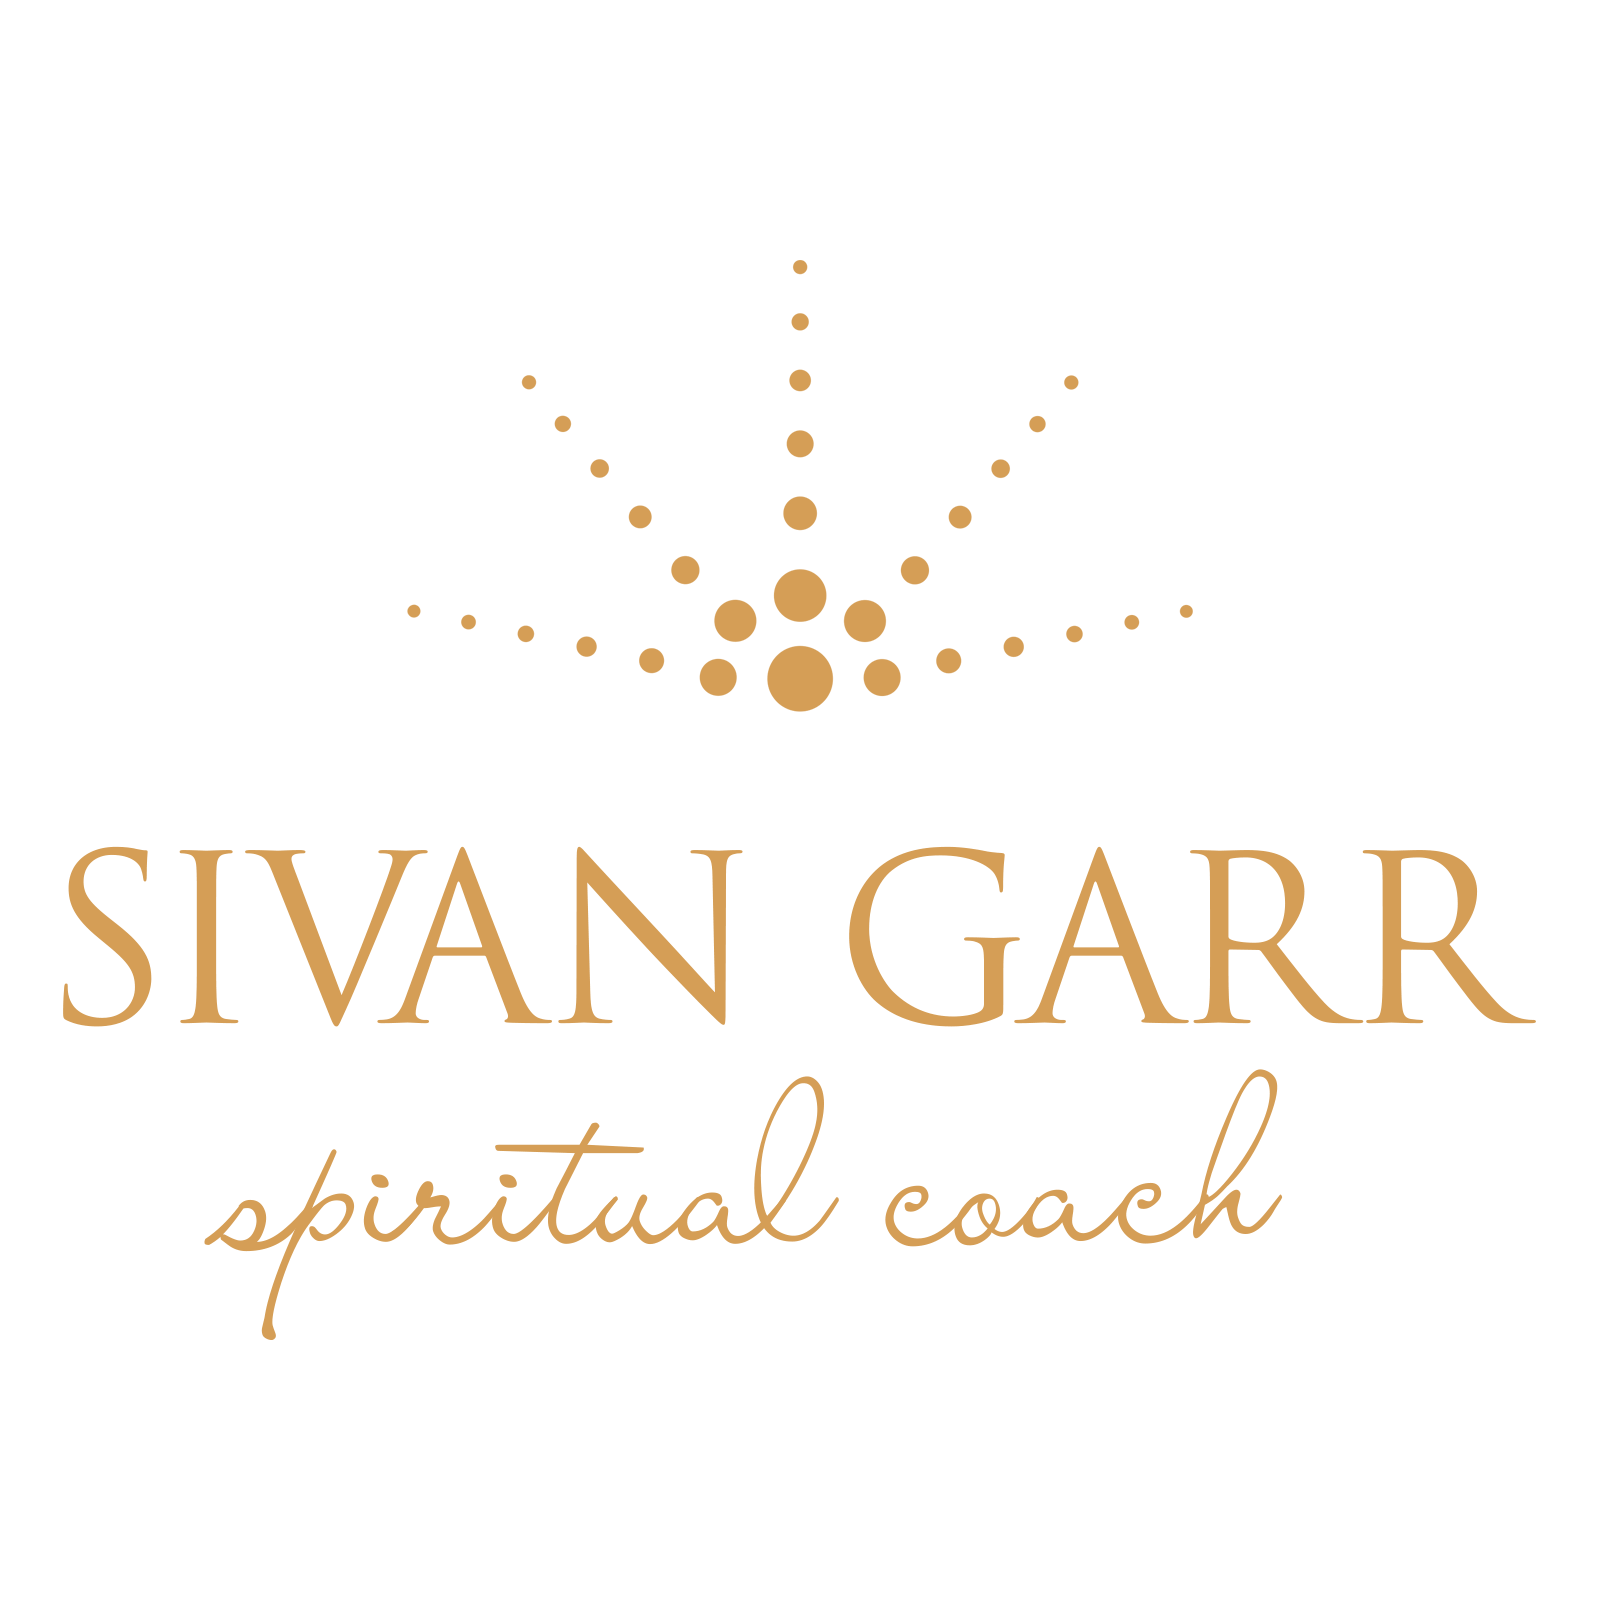 Sivan Garr Spiritual Coach logo